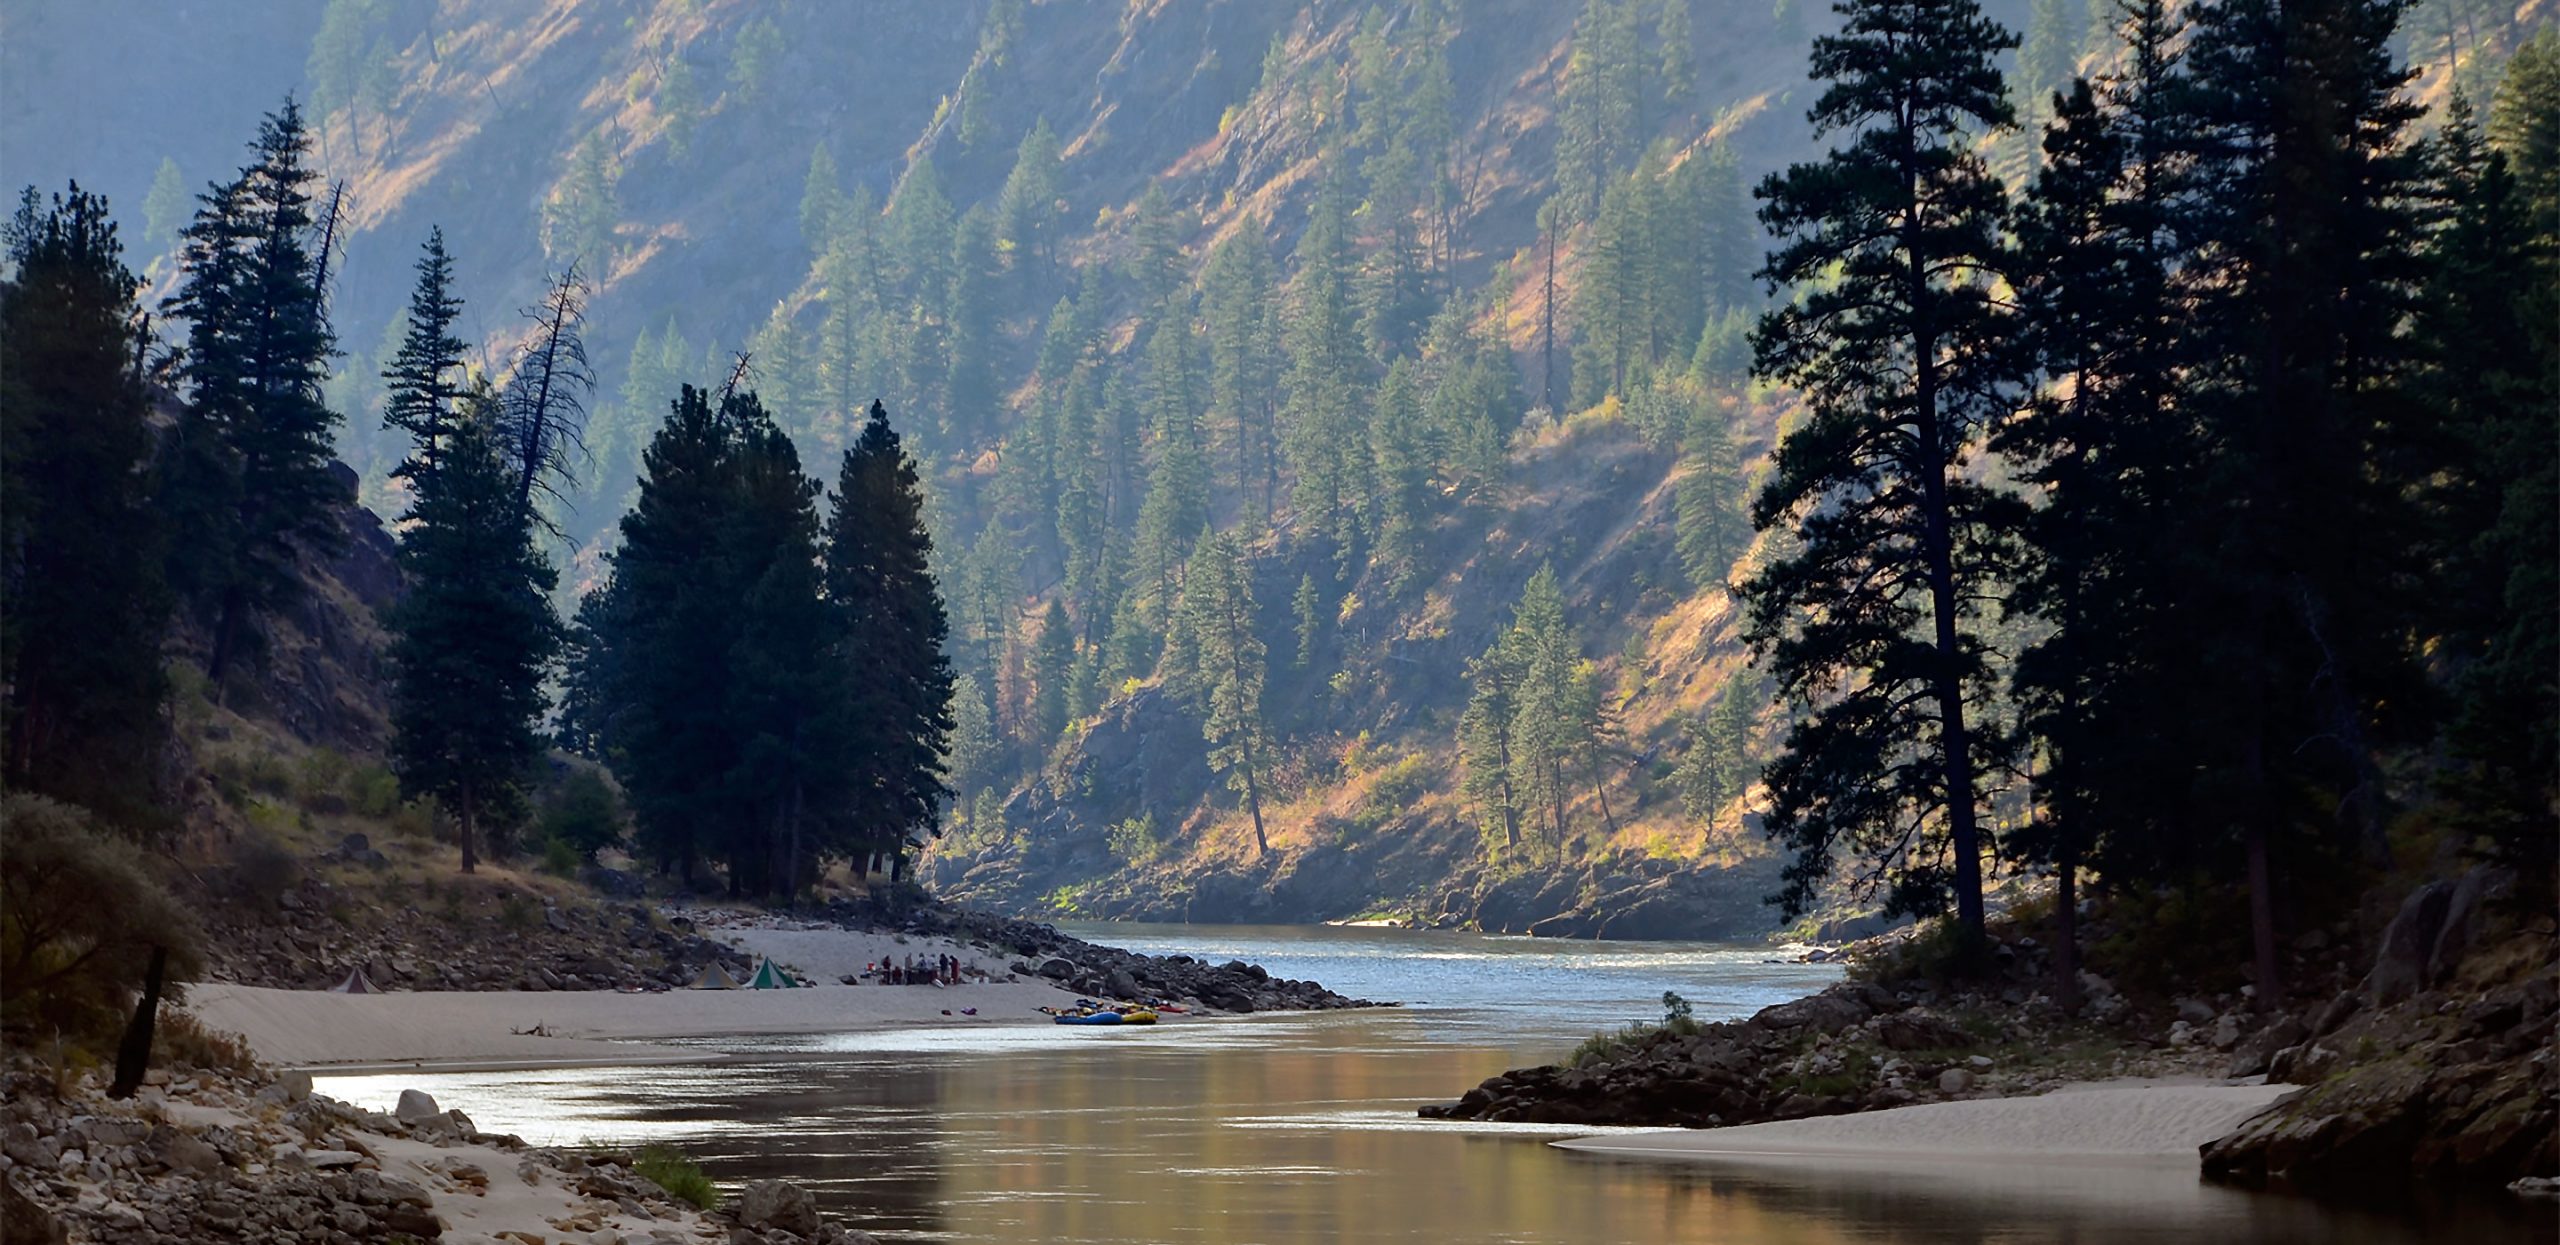 Idaho Salmon - Rafting the River of No Return